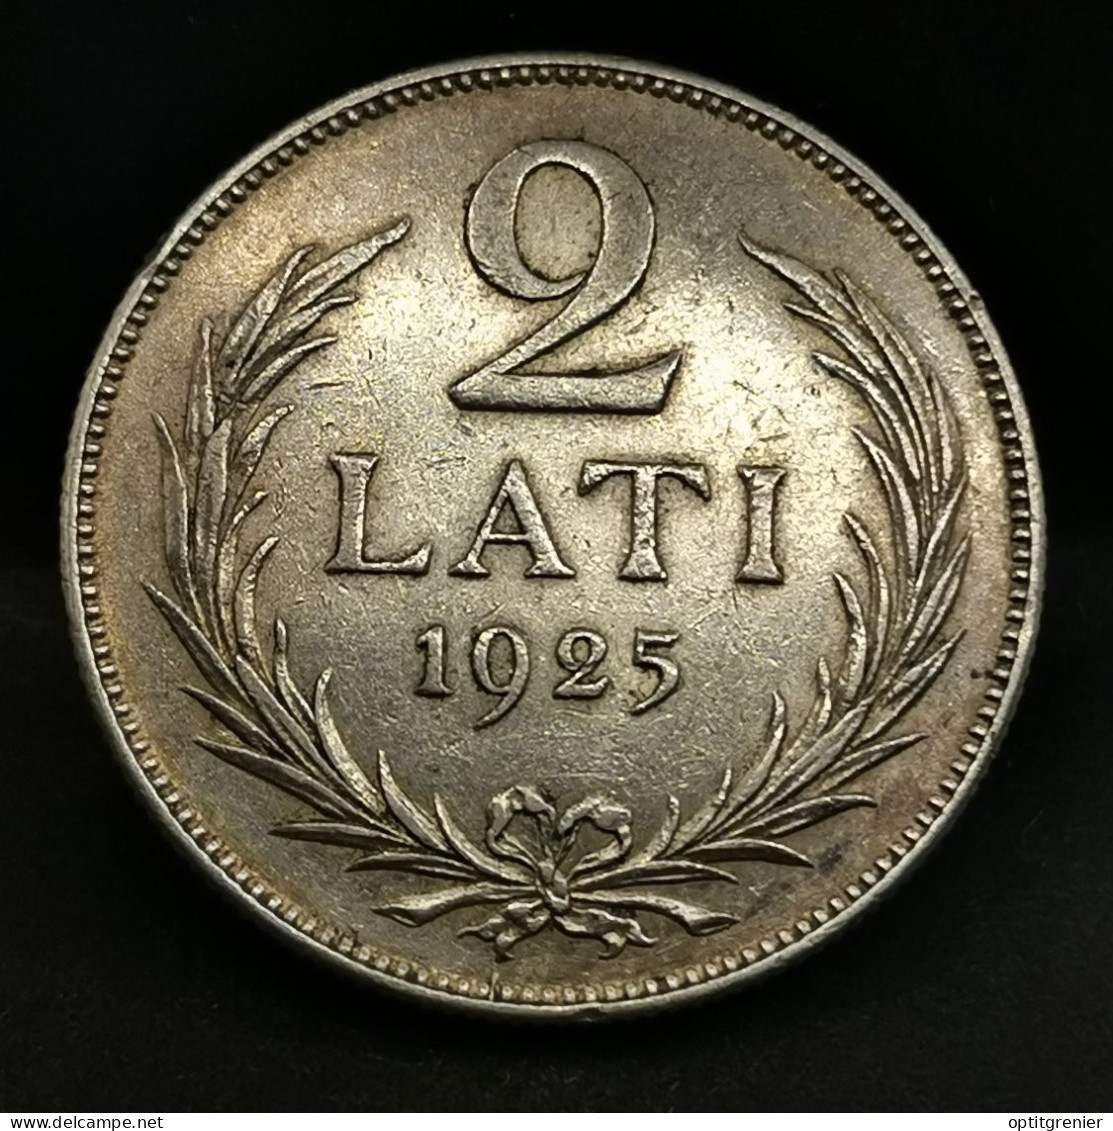 2 LATI 1925 ARGENT LETTONIE / SILVER - Latvia